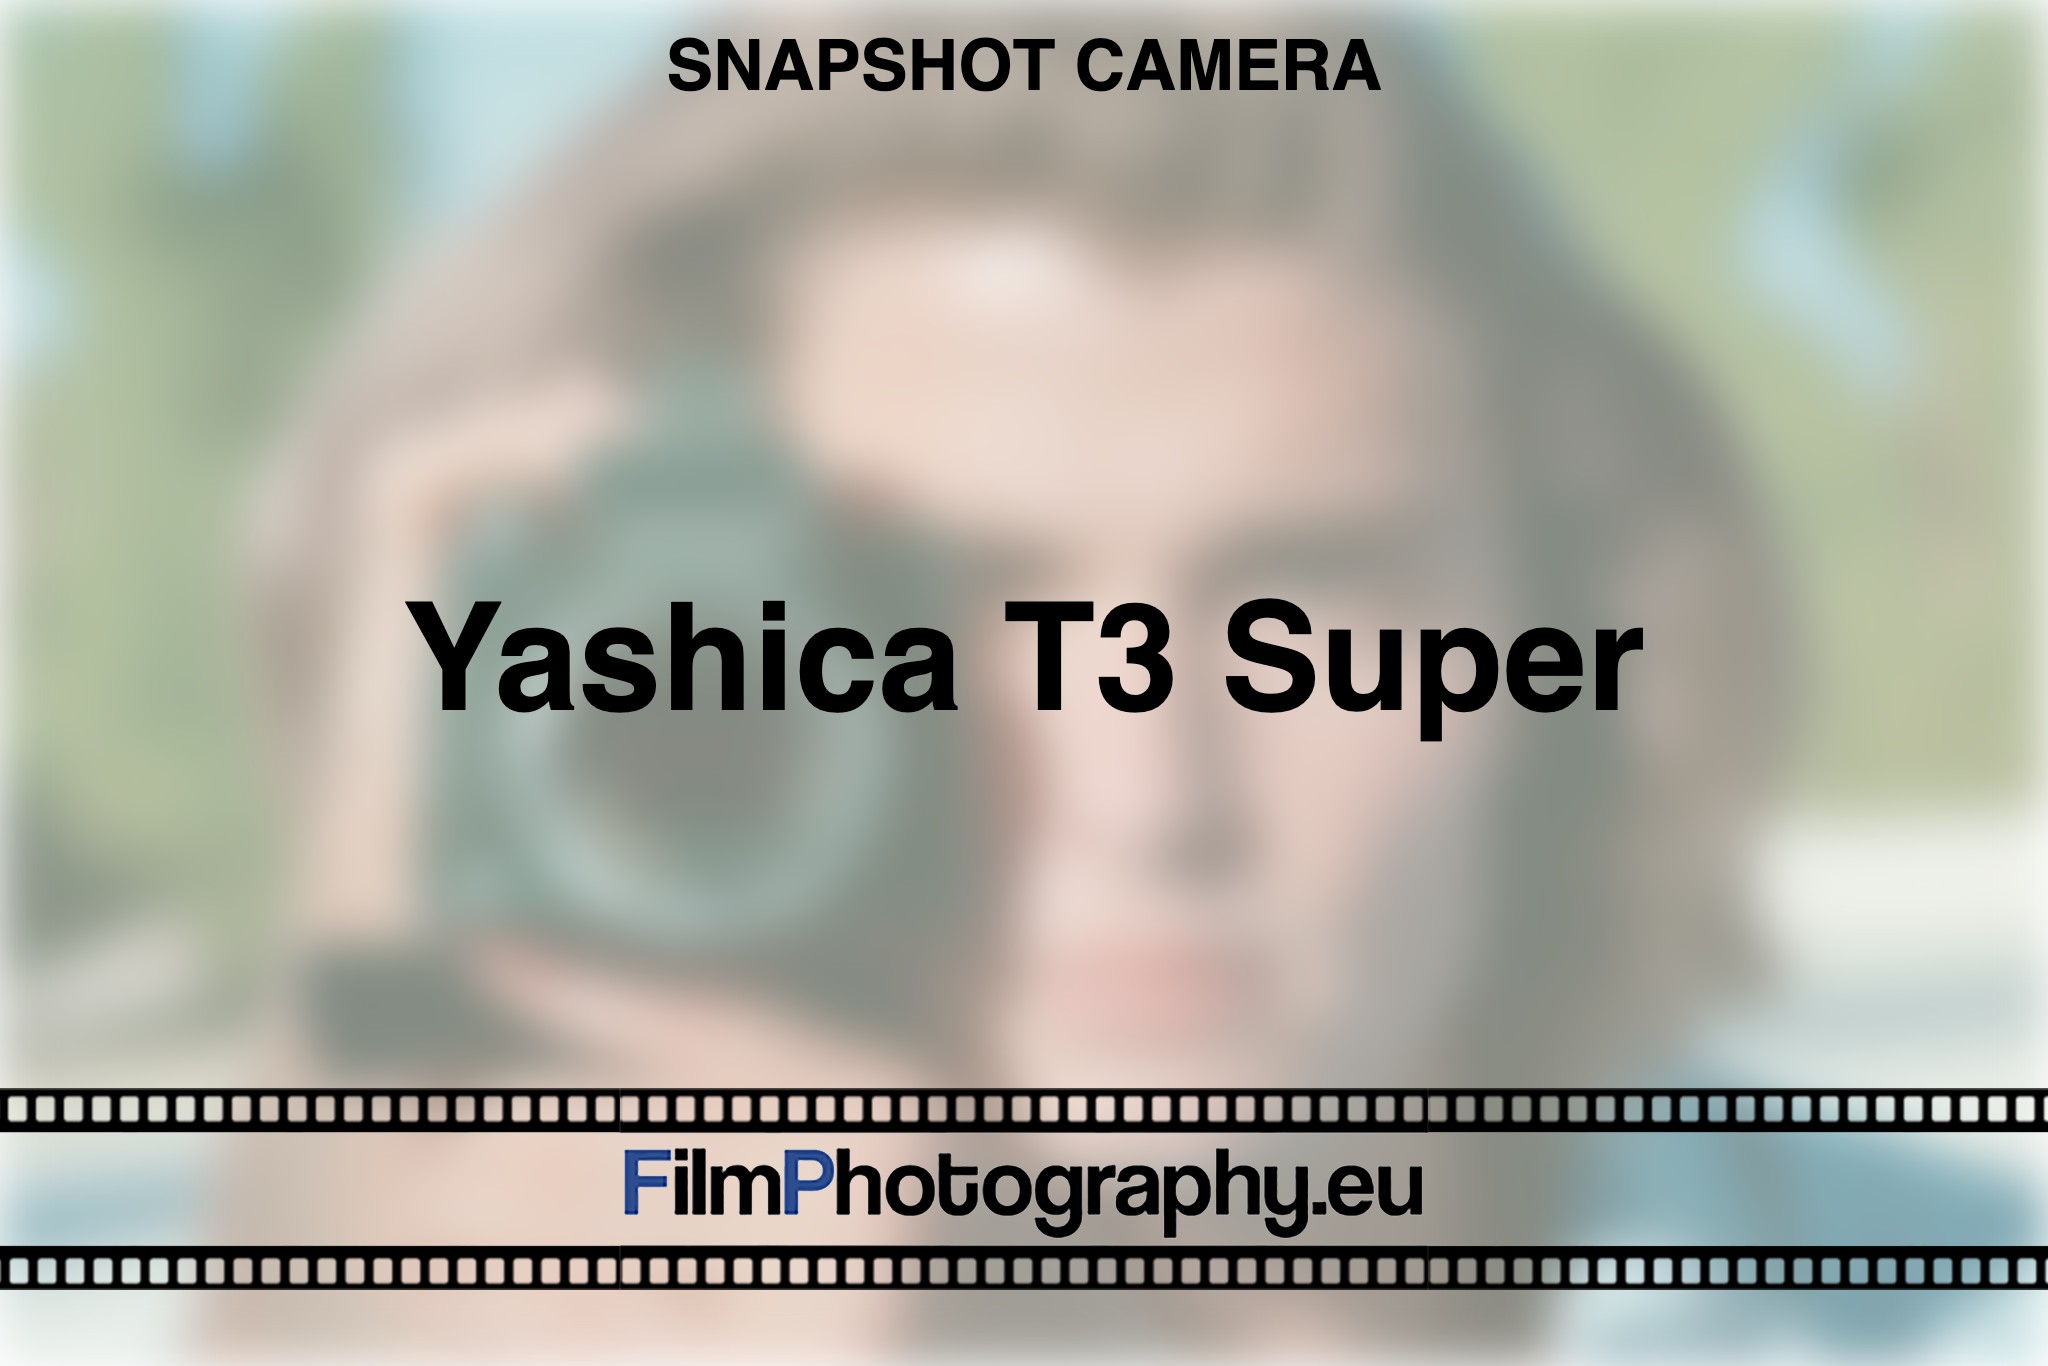 yashica-t3-super-snapshot-camera-bnv